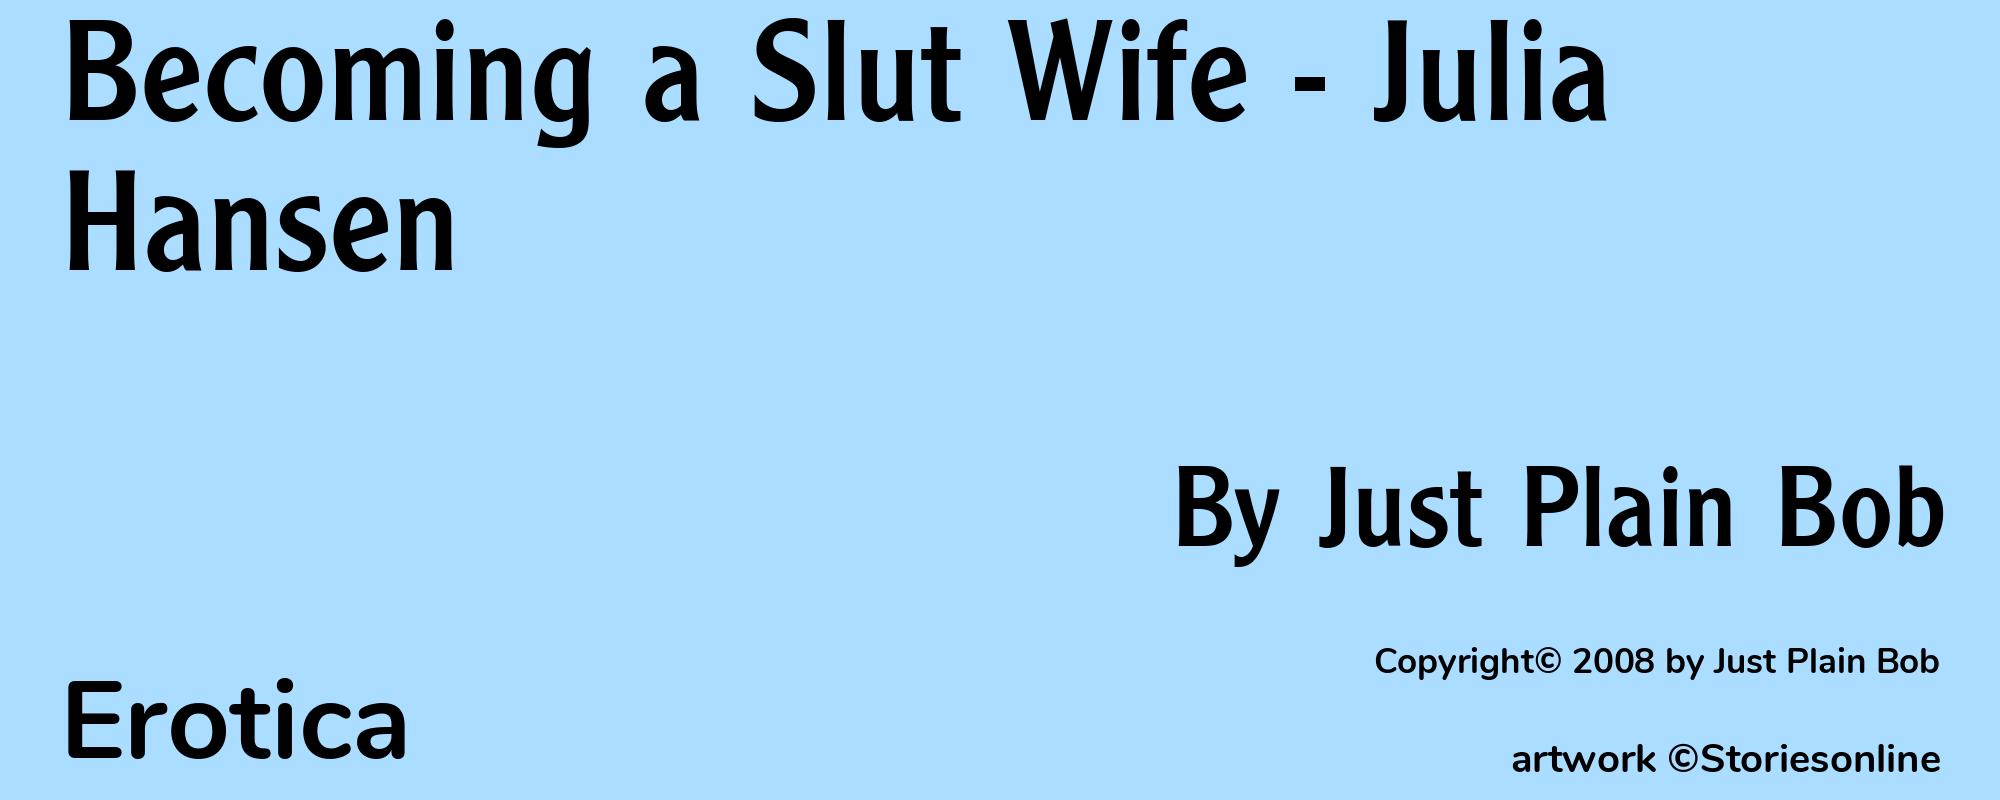 Becoming a Slut Wife - Julia Hansen - Cover